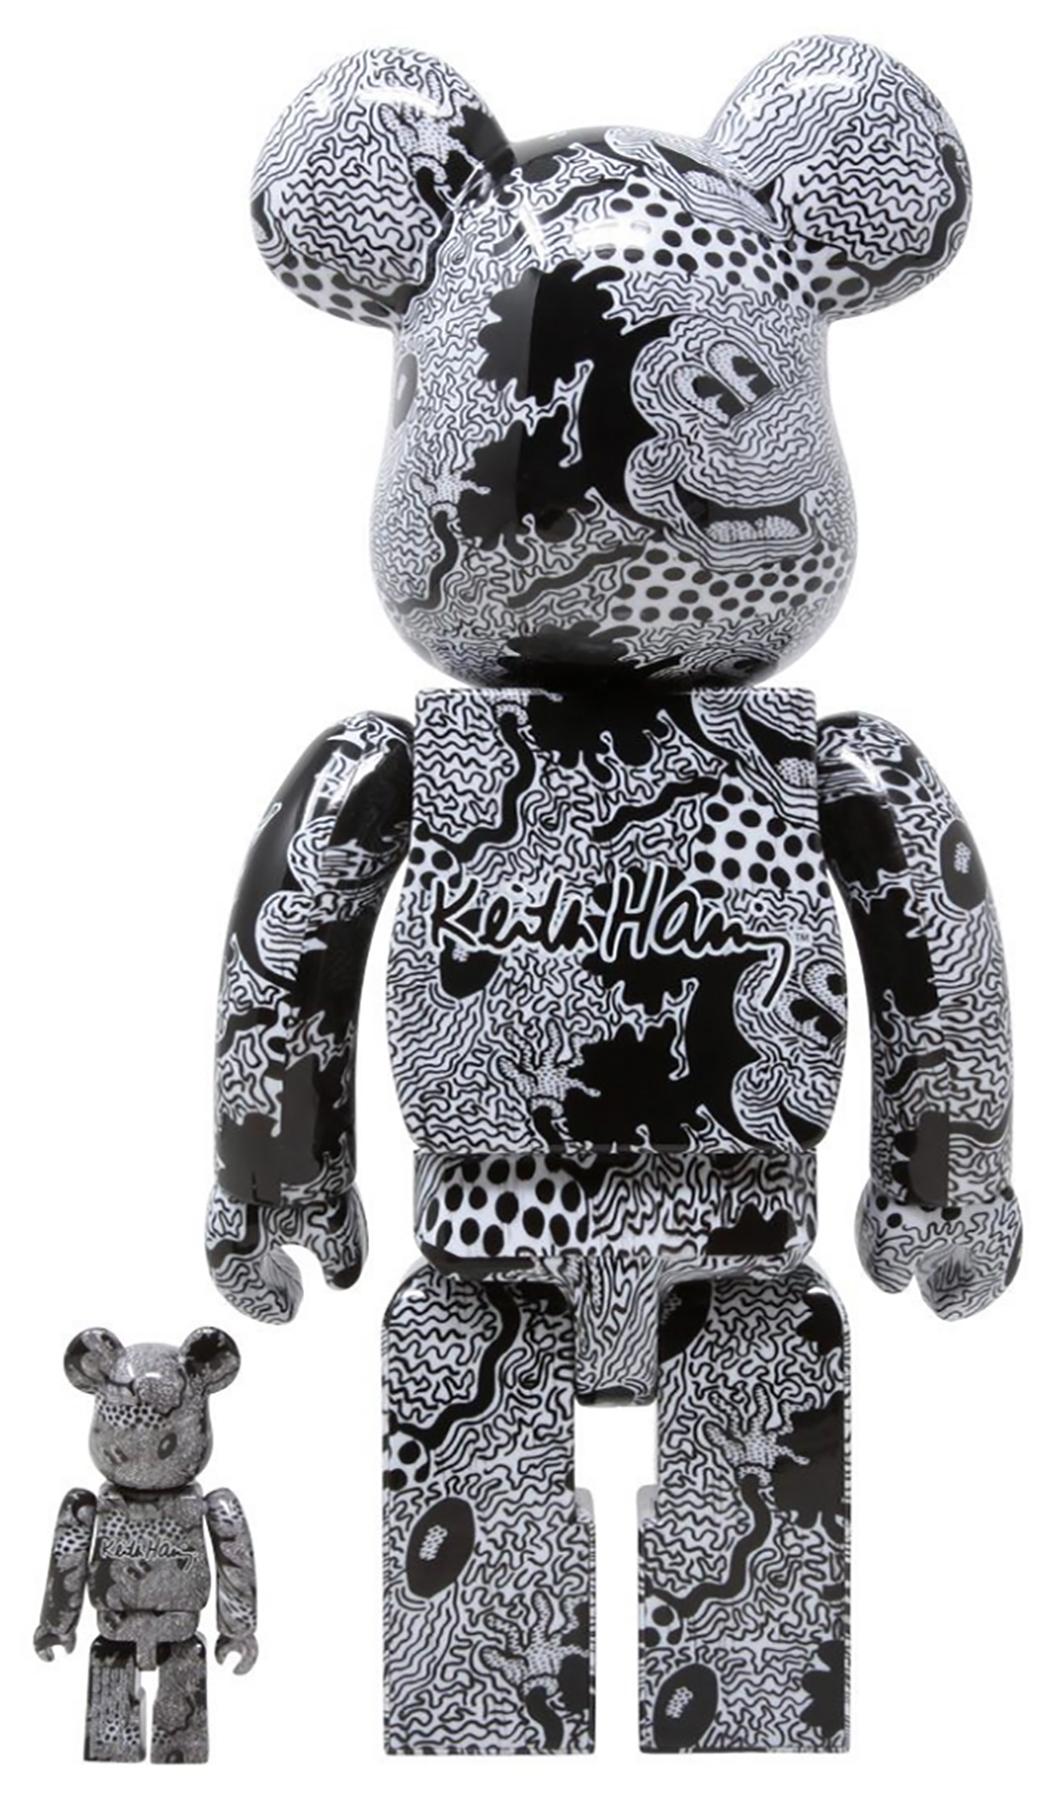 Keith Haring Bearbrick 400 % Figur (Haring Mickey Mouse BE@RBRICK) (Zeitgenössisch), Print, von (after) Keith Haring